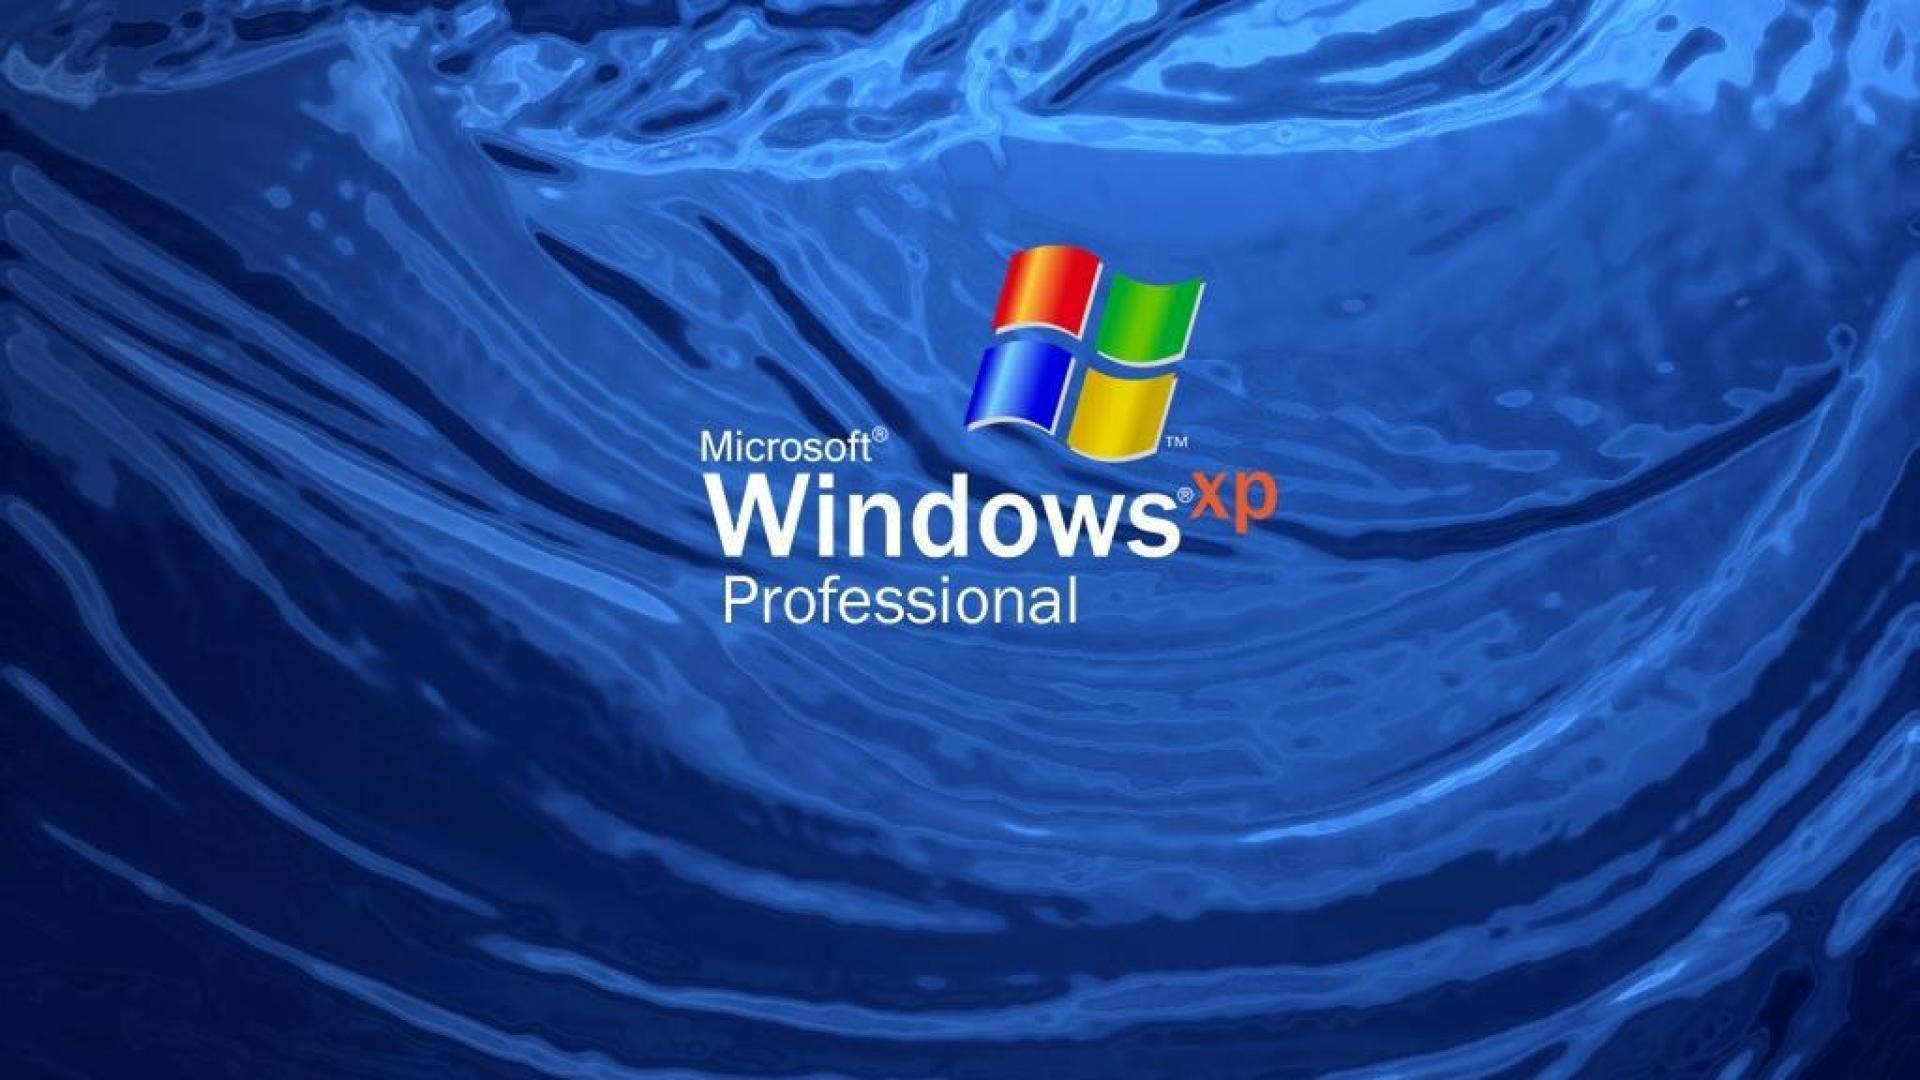 Windows XP Original Wallpaper